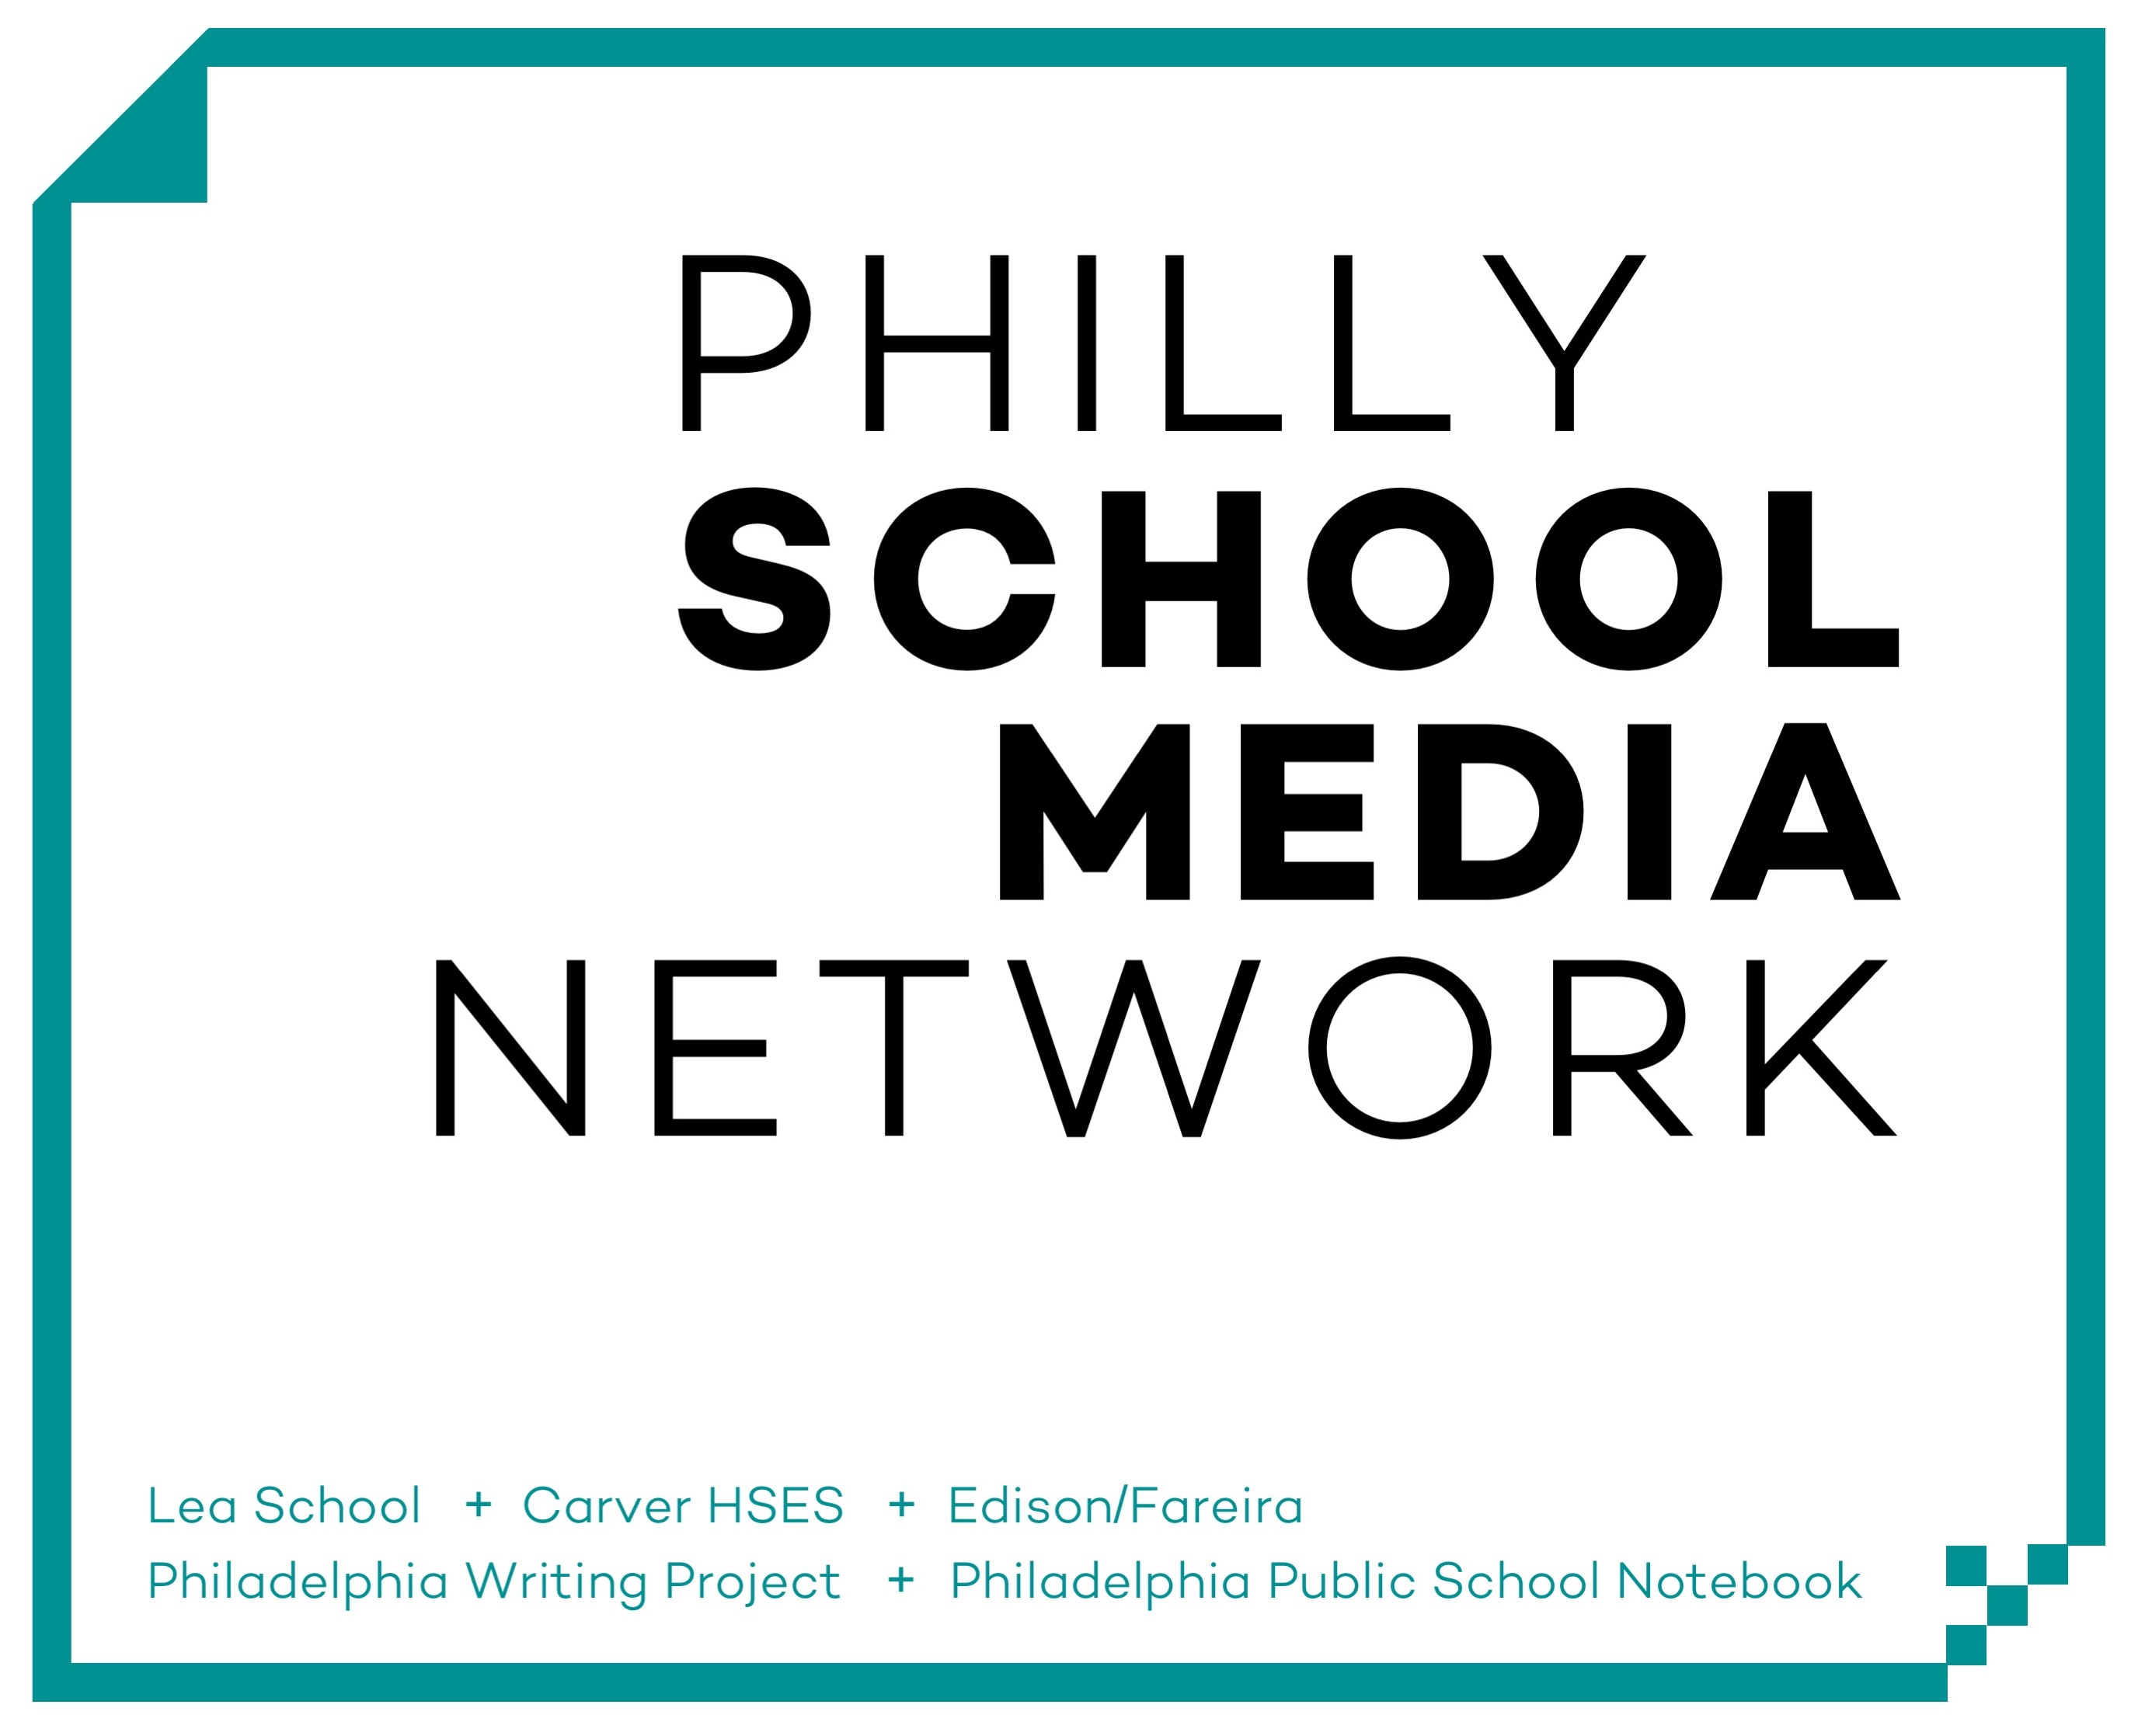 Philly School Media Network: Nurturing Journalism and Student Voices